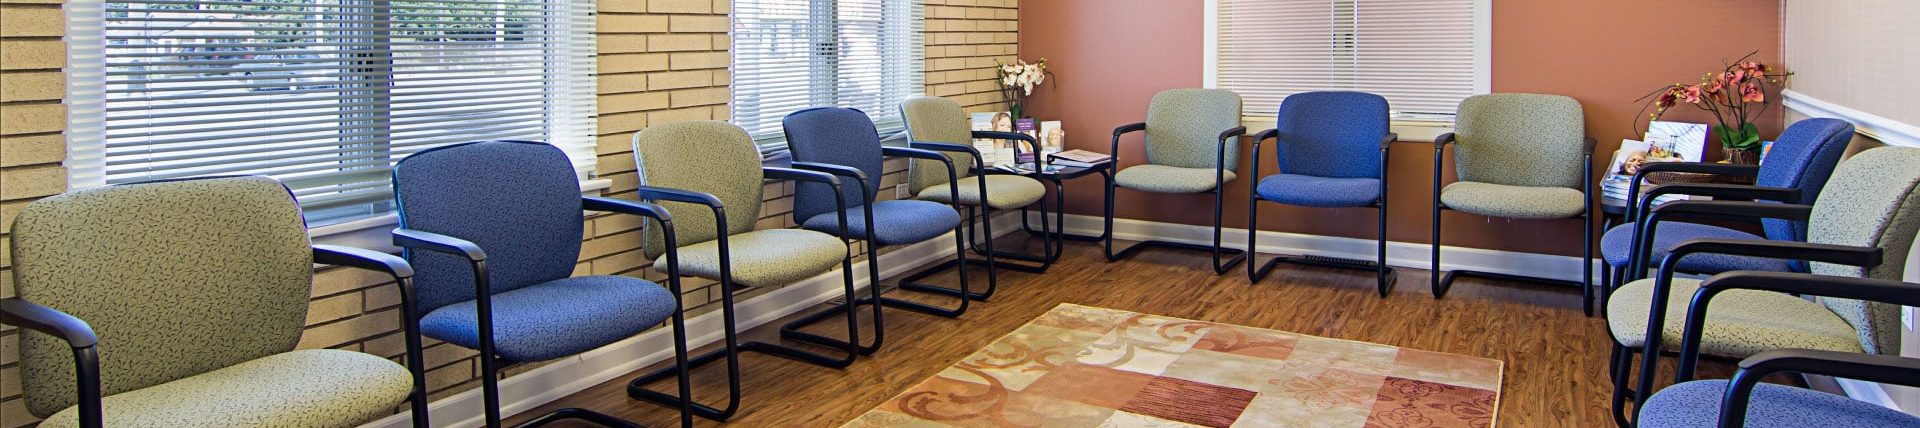 Oak Lawn Office Waiting Area - Family Dental Care